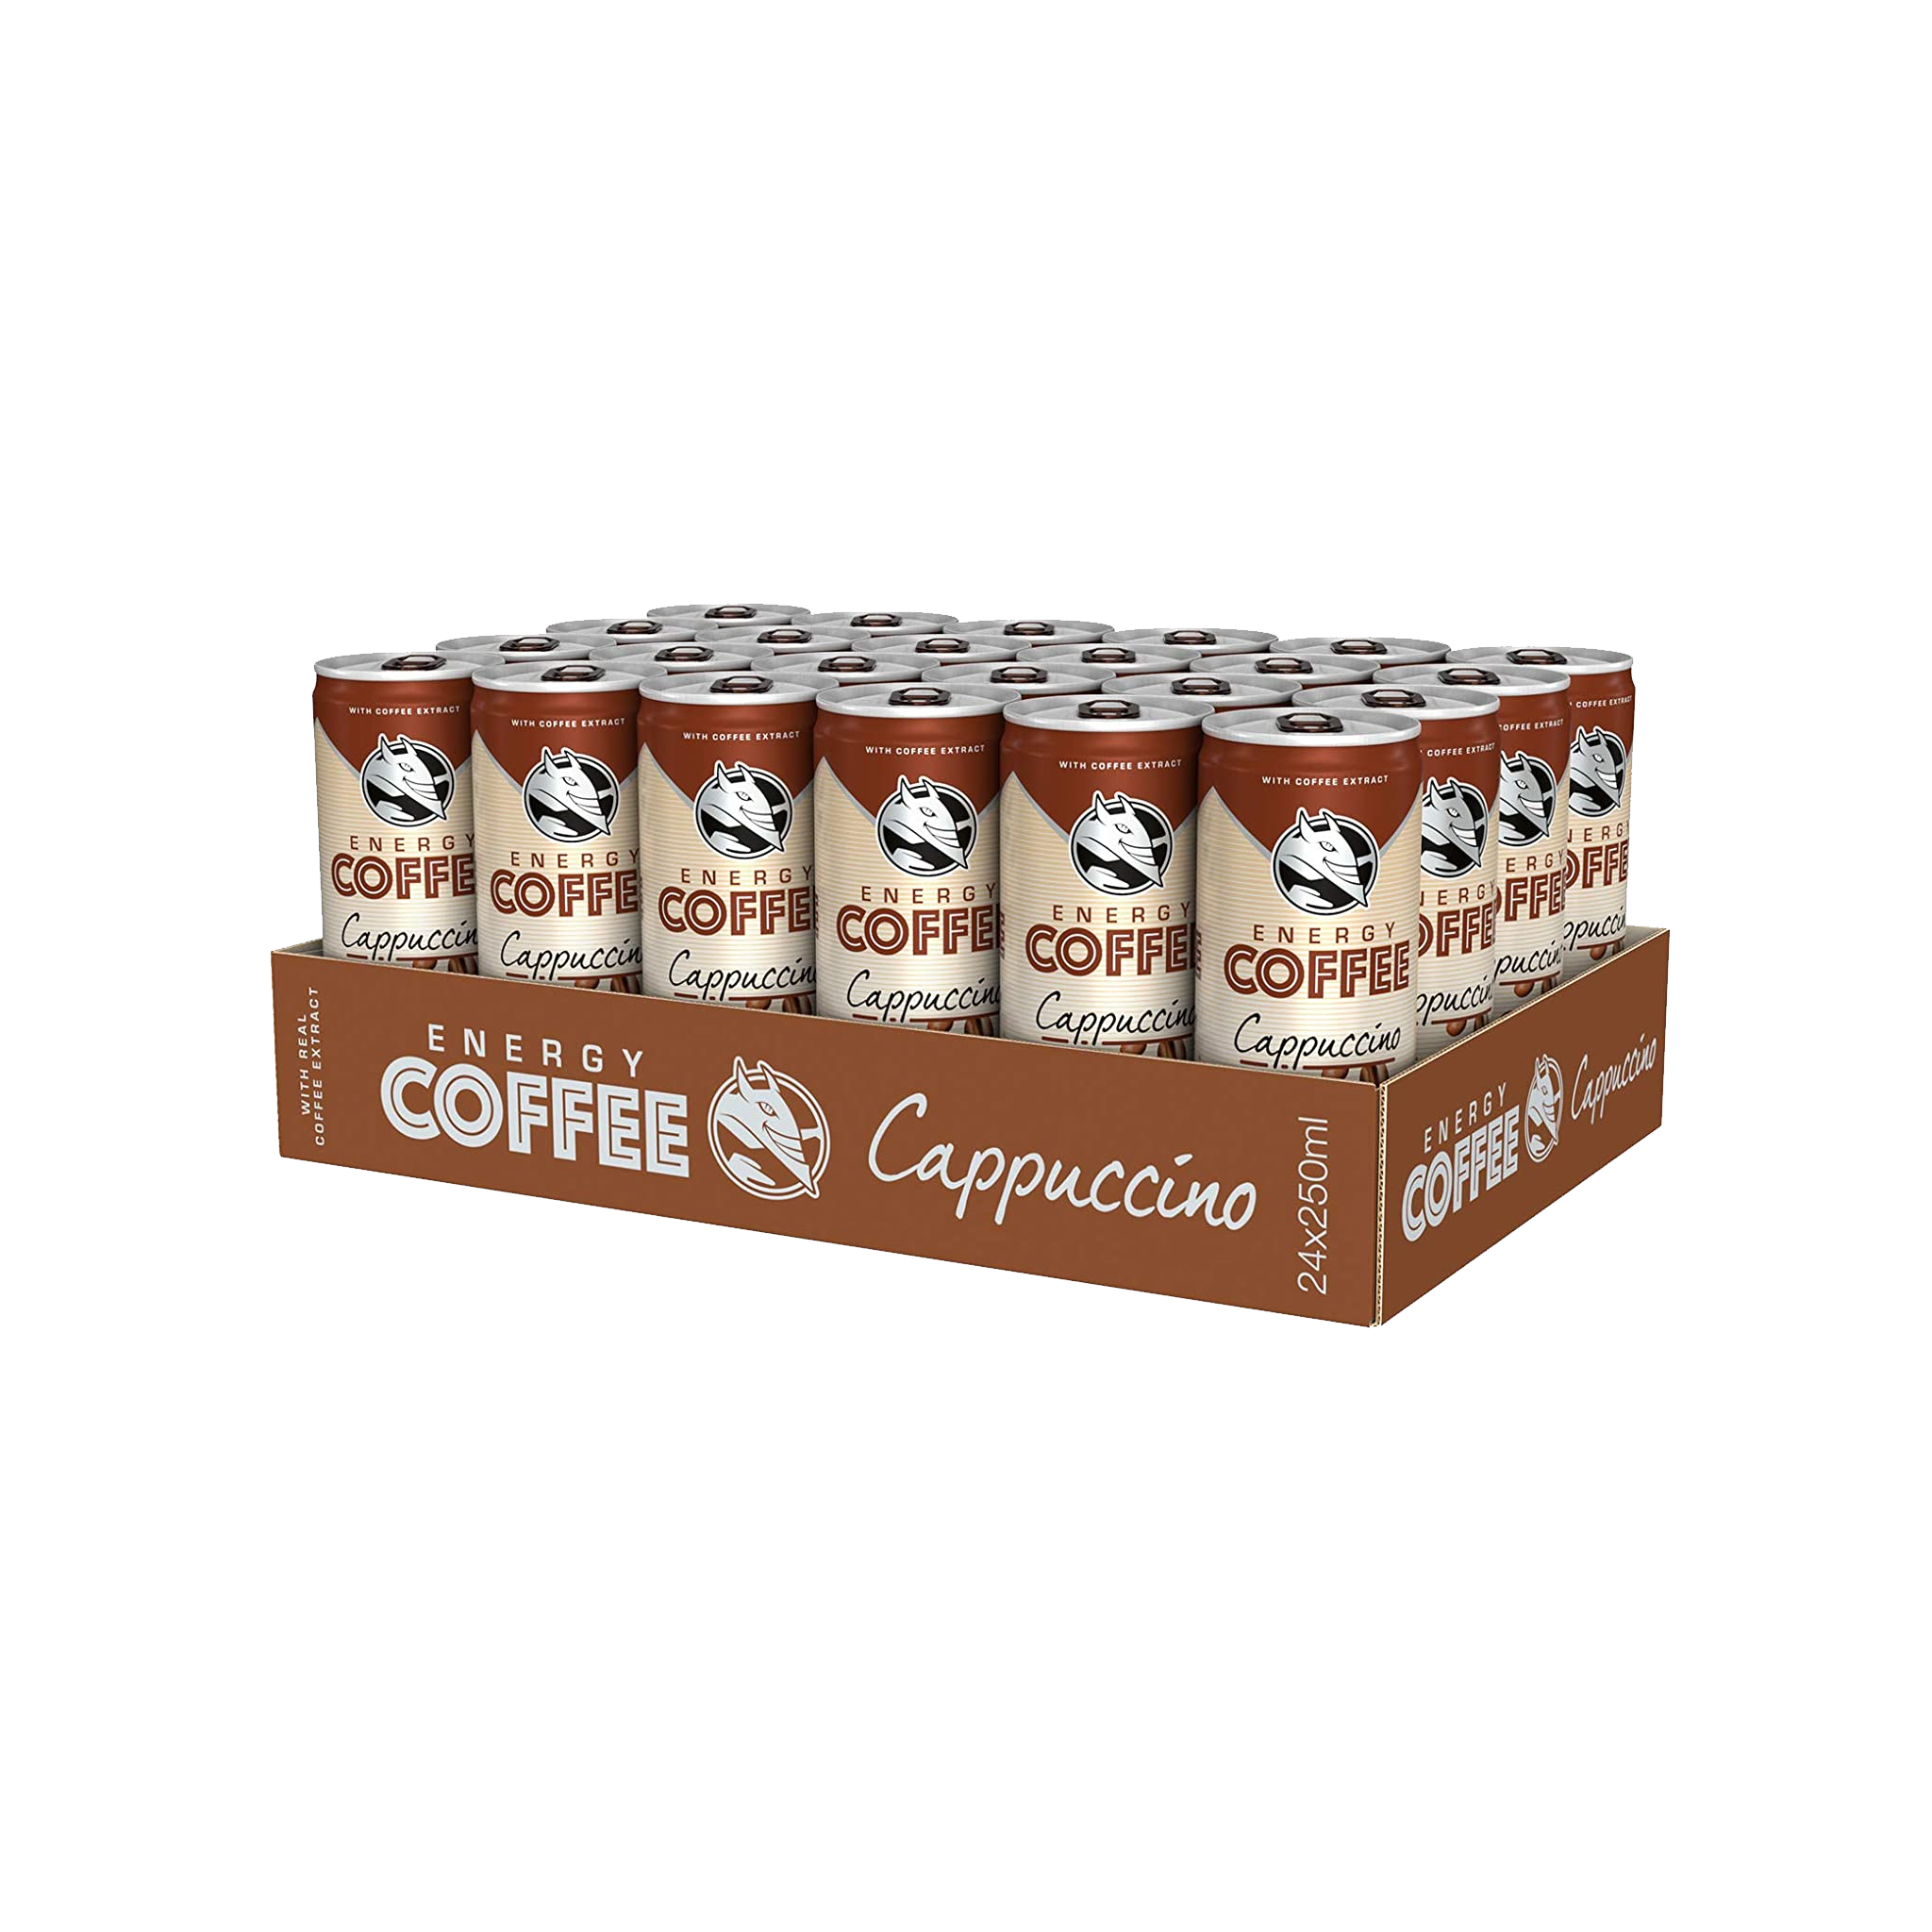 HELL ENERGY COFFEE Cappuccino Iced Coffee